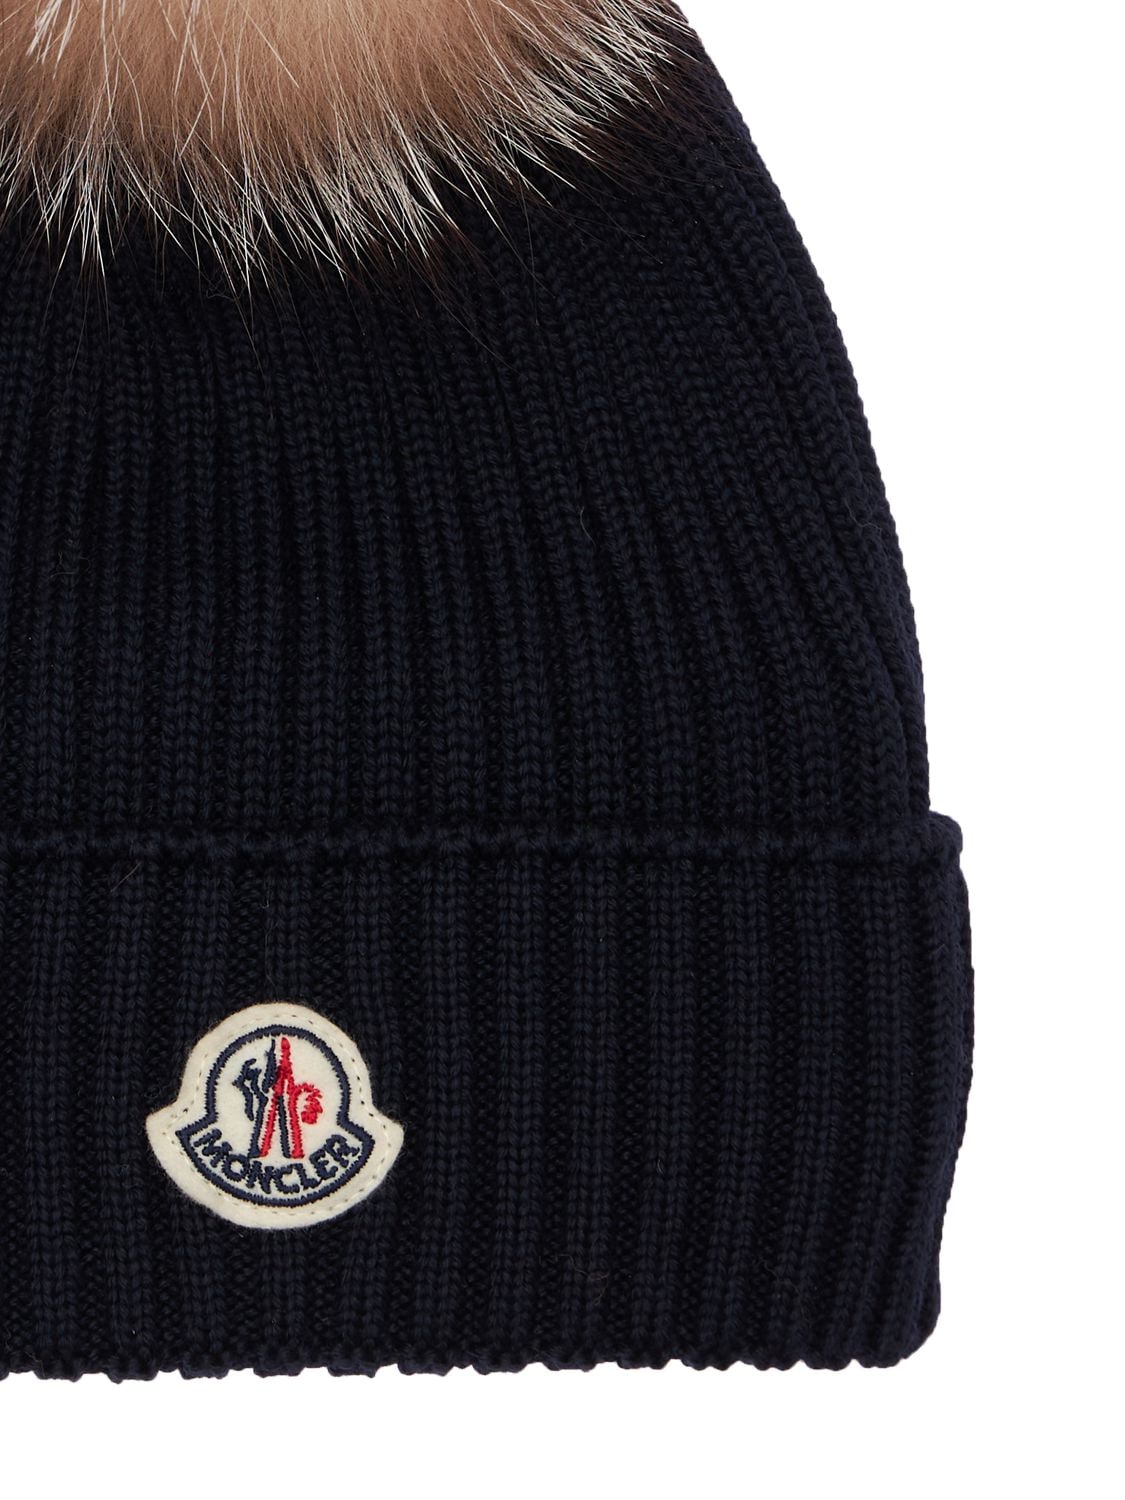 Moncler Babies' Wool Knit Hat W/ Fur Pompom In Navy